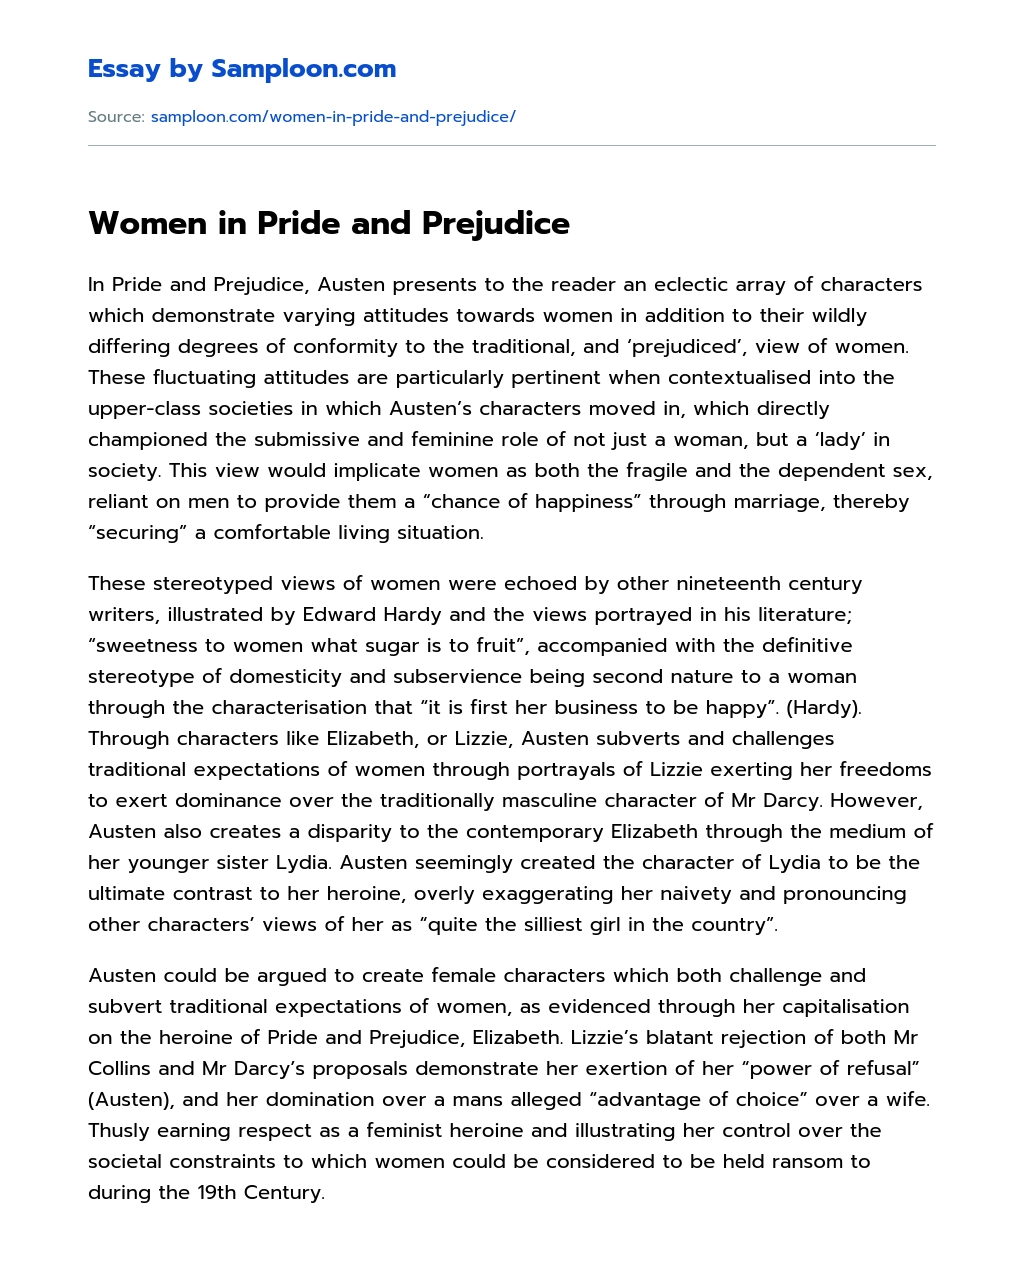 Women in Pride and Prejudice essay